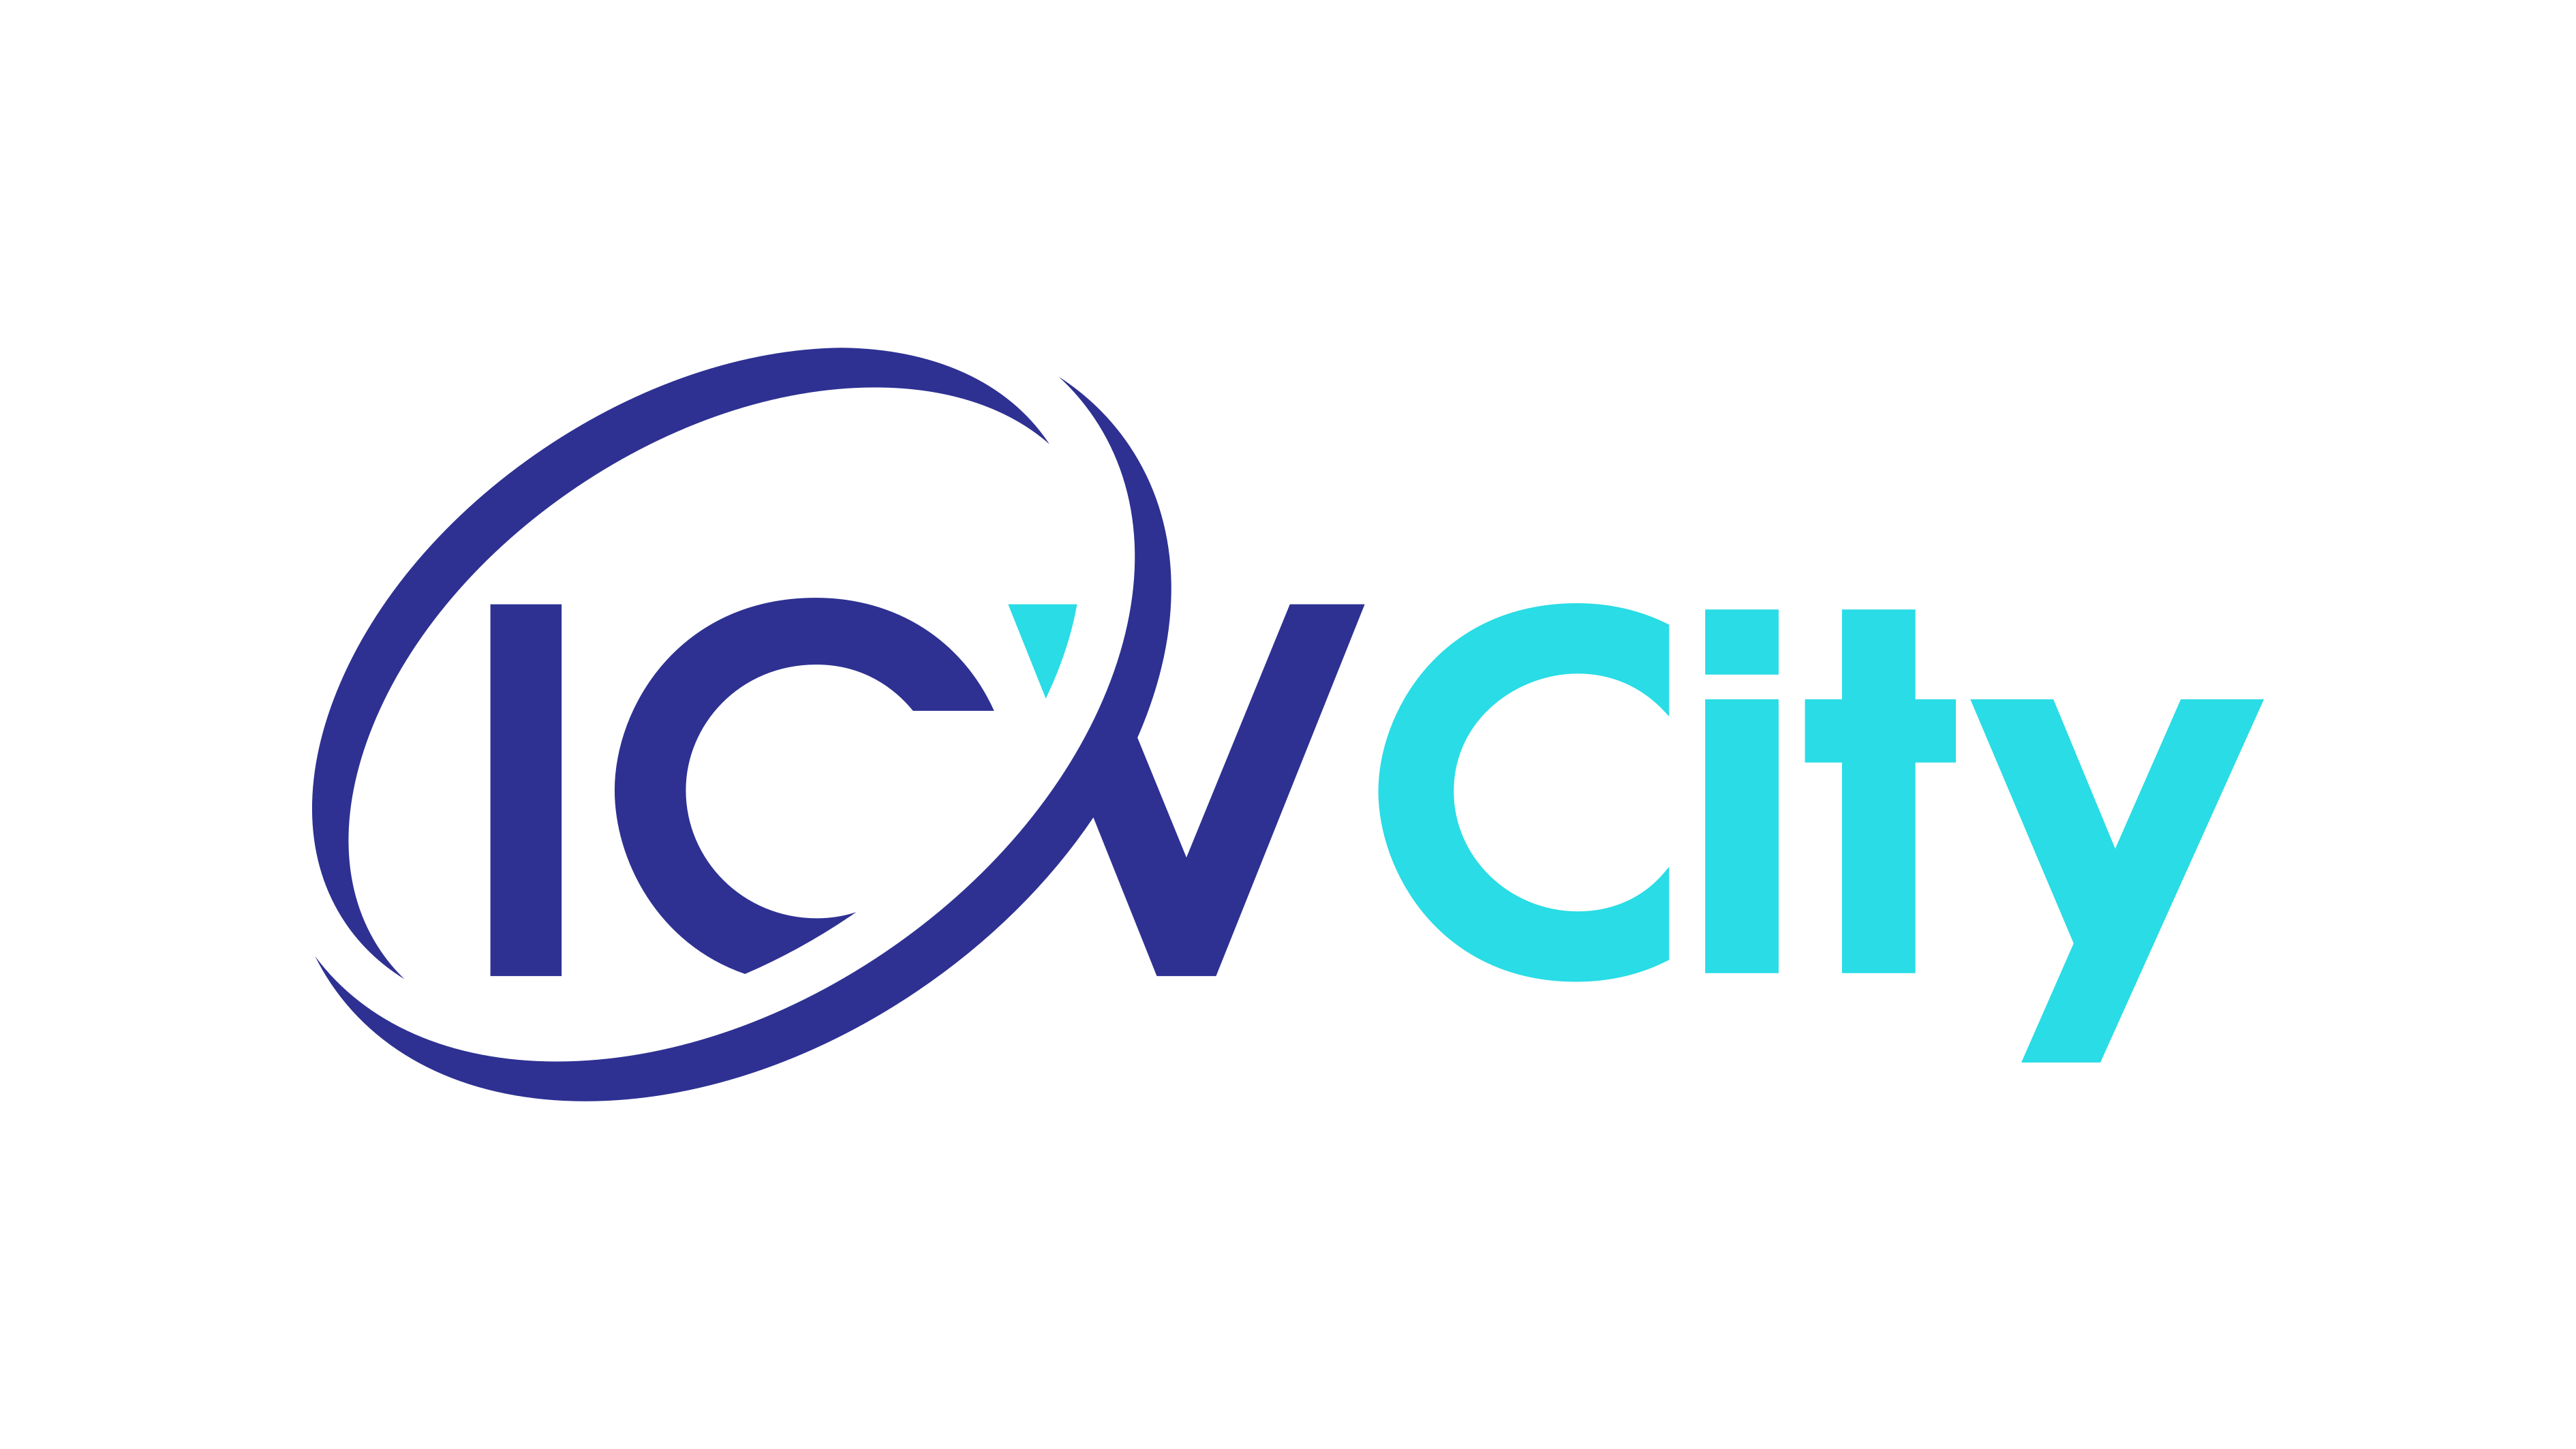 ICV CITY